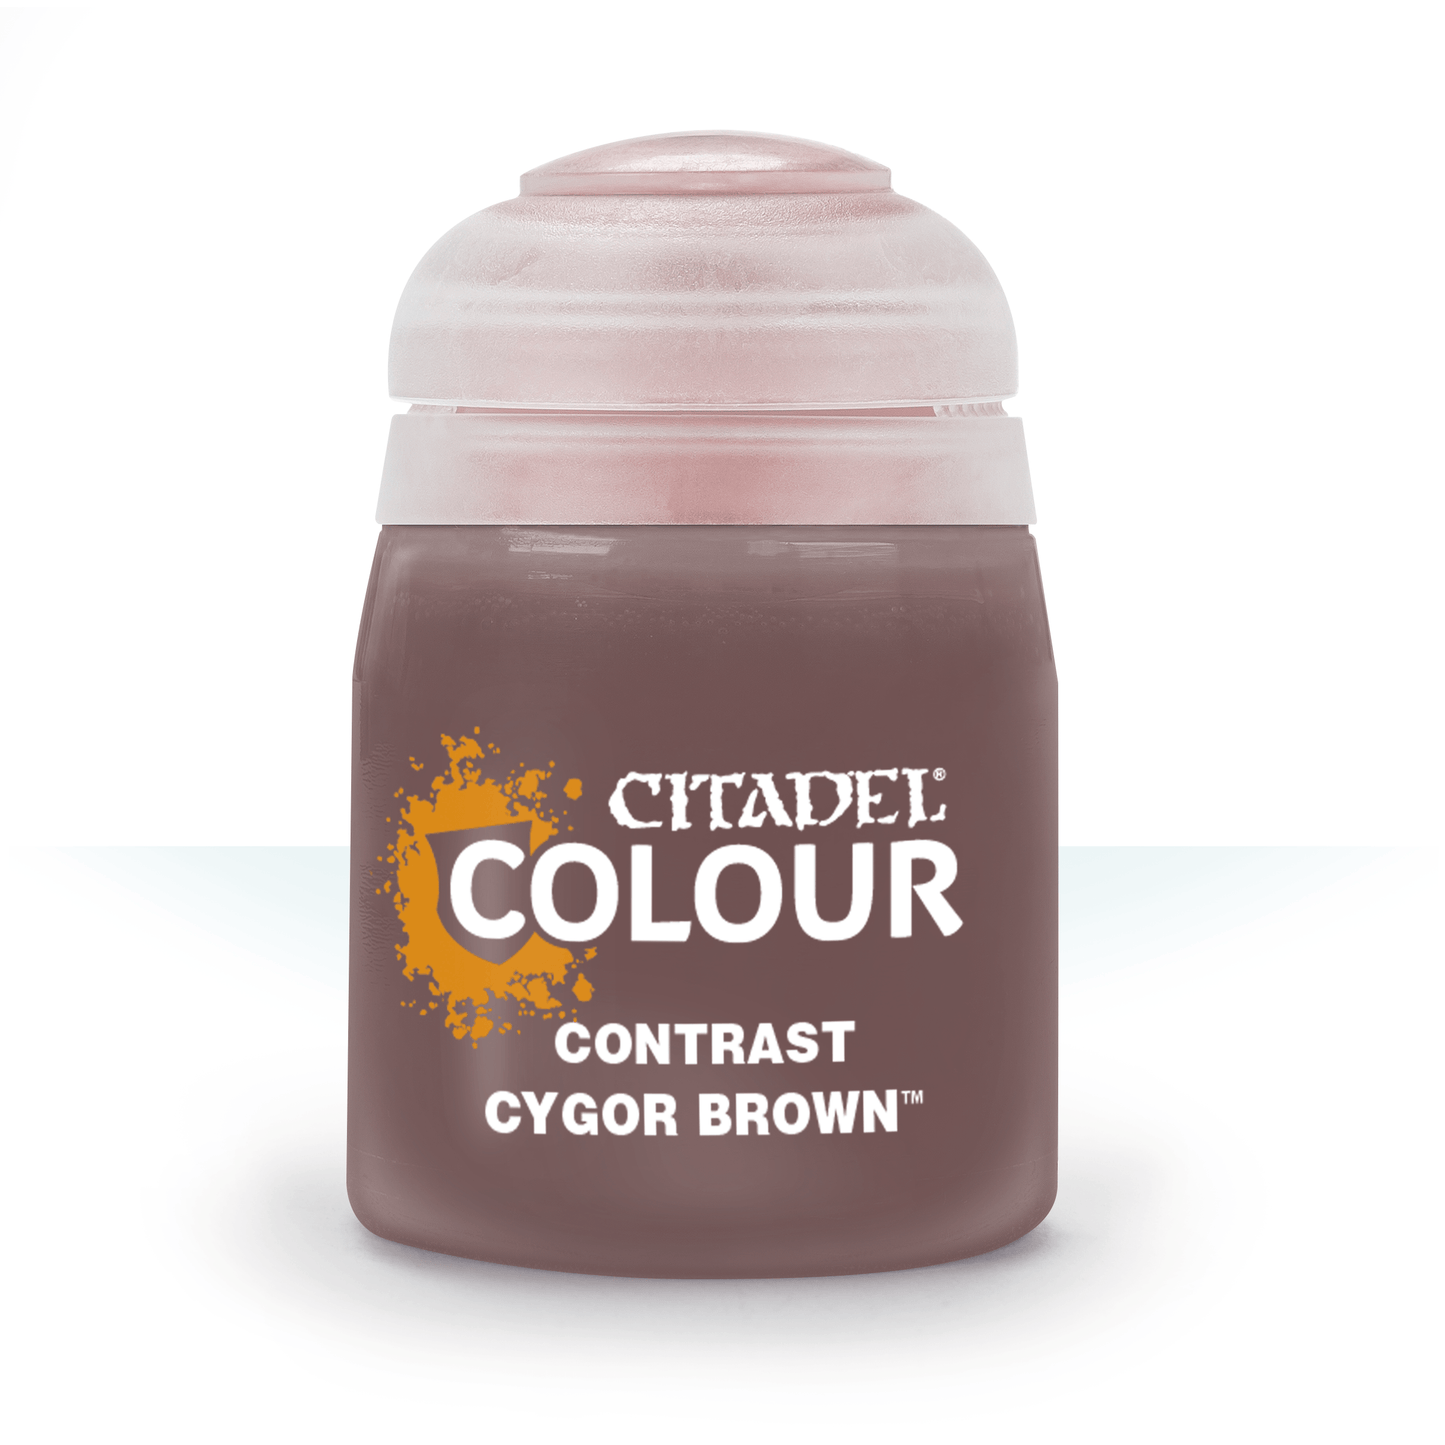 Citadel Colour - Cygor Brown Contrast Paint